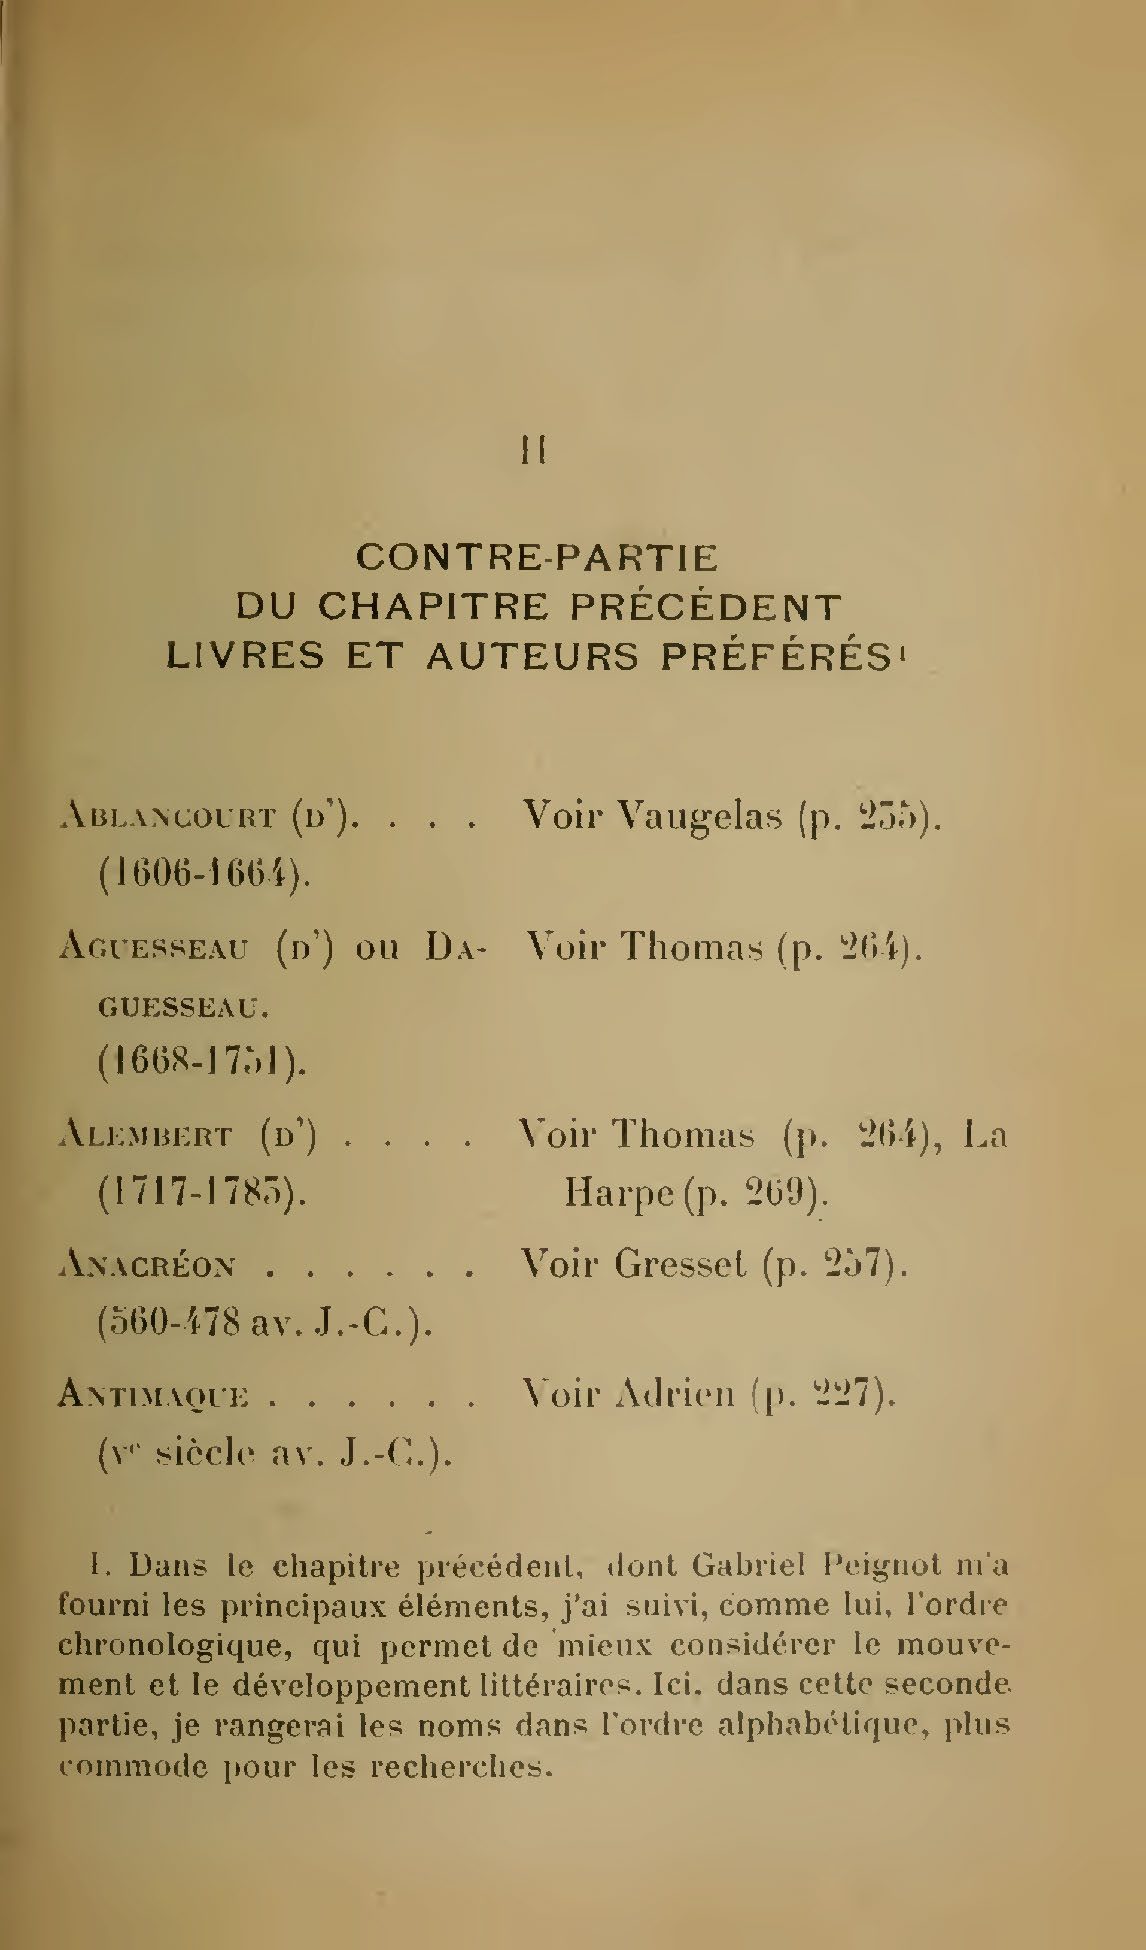 Albert Cim, Le Livre, t. I, p. 283.